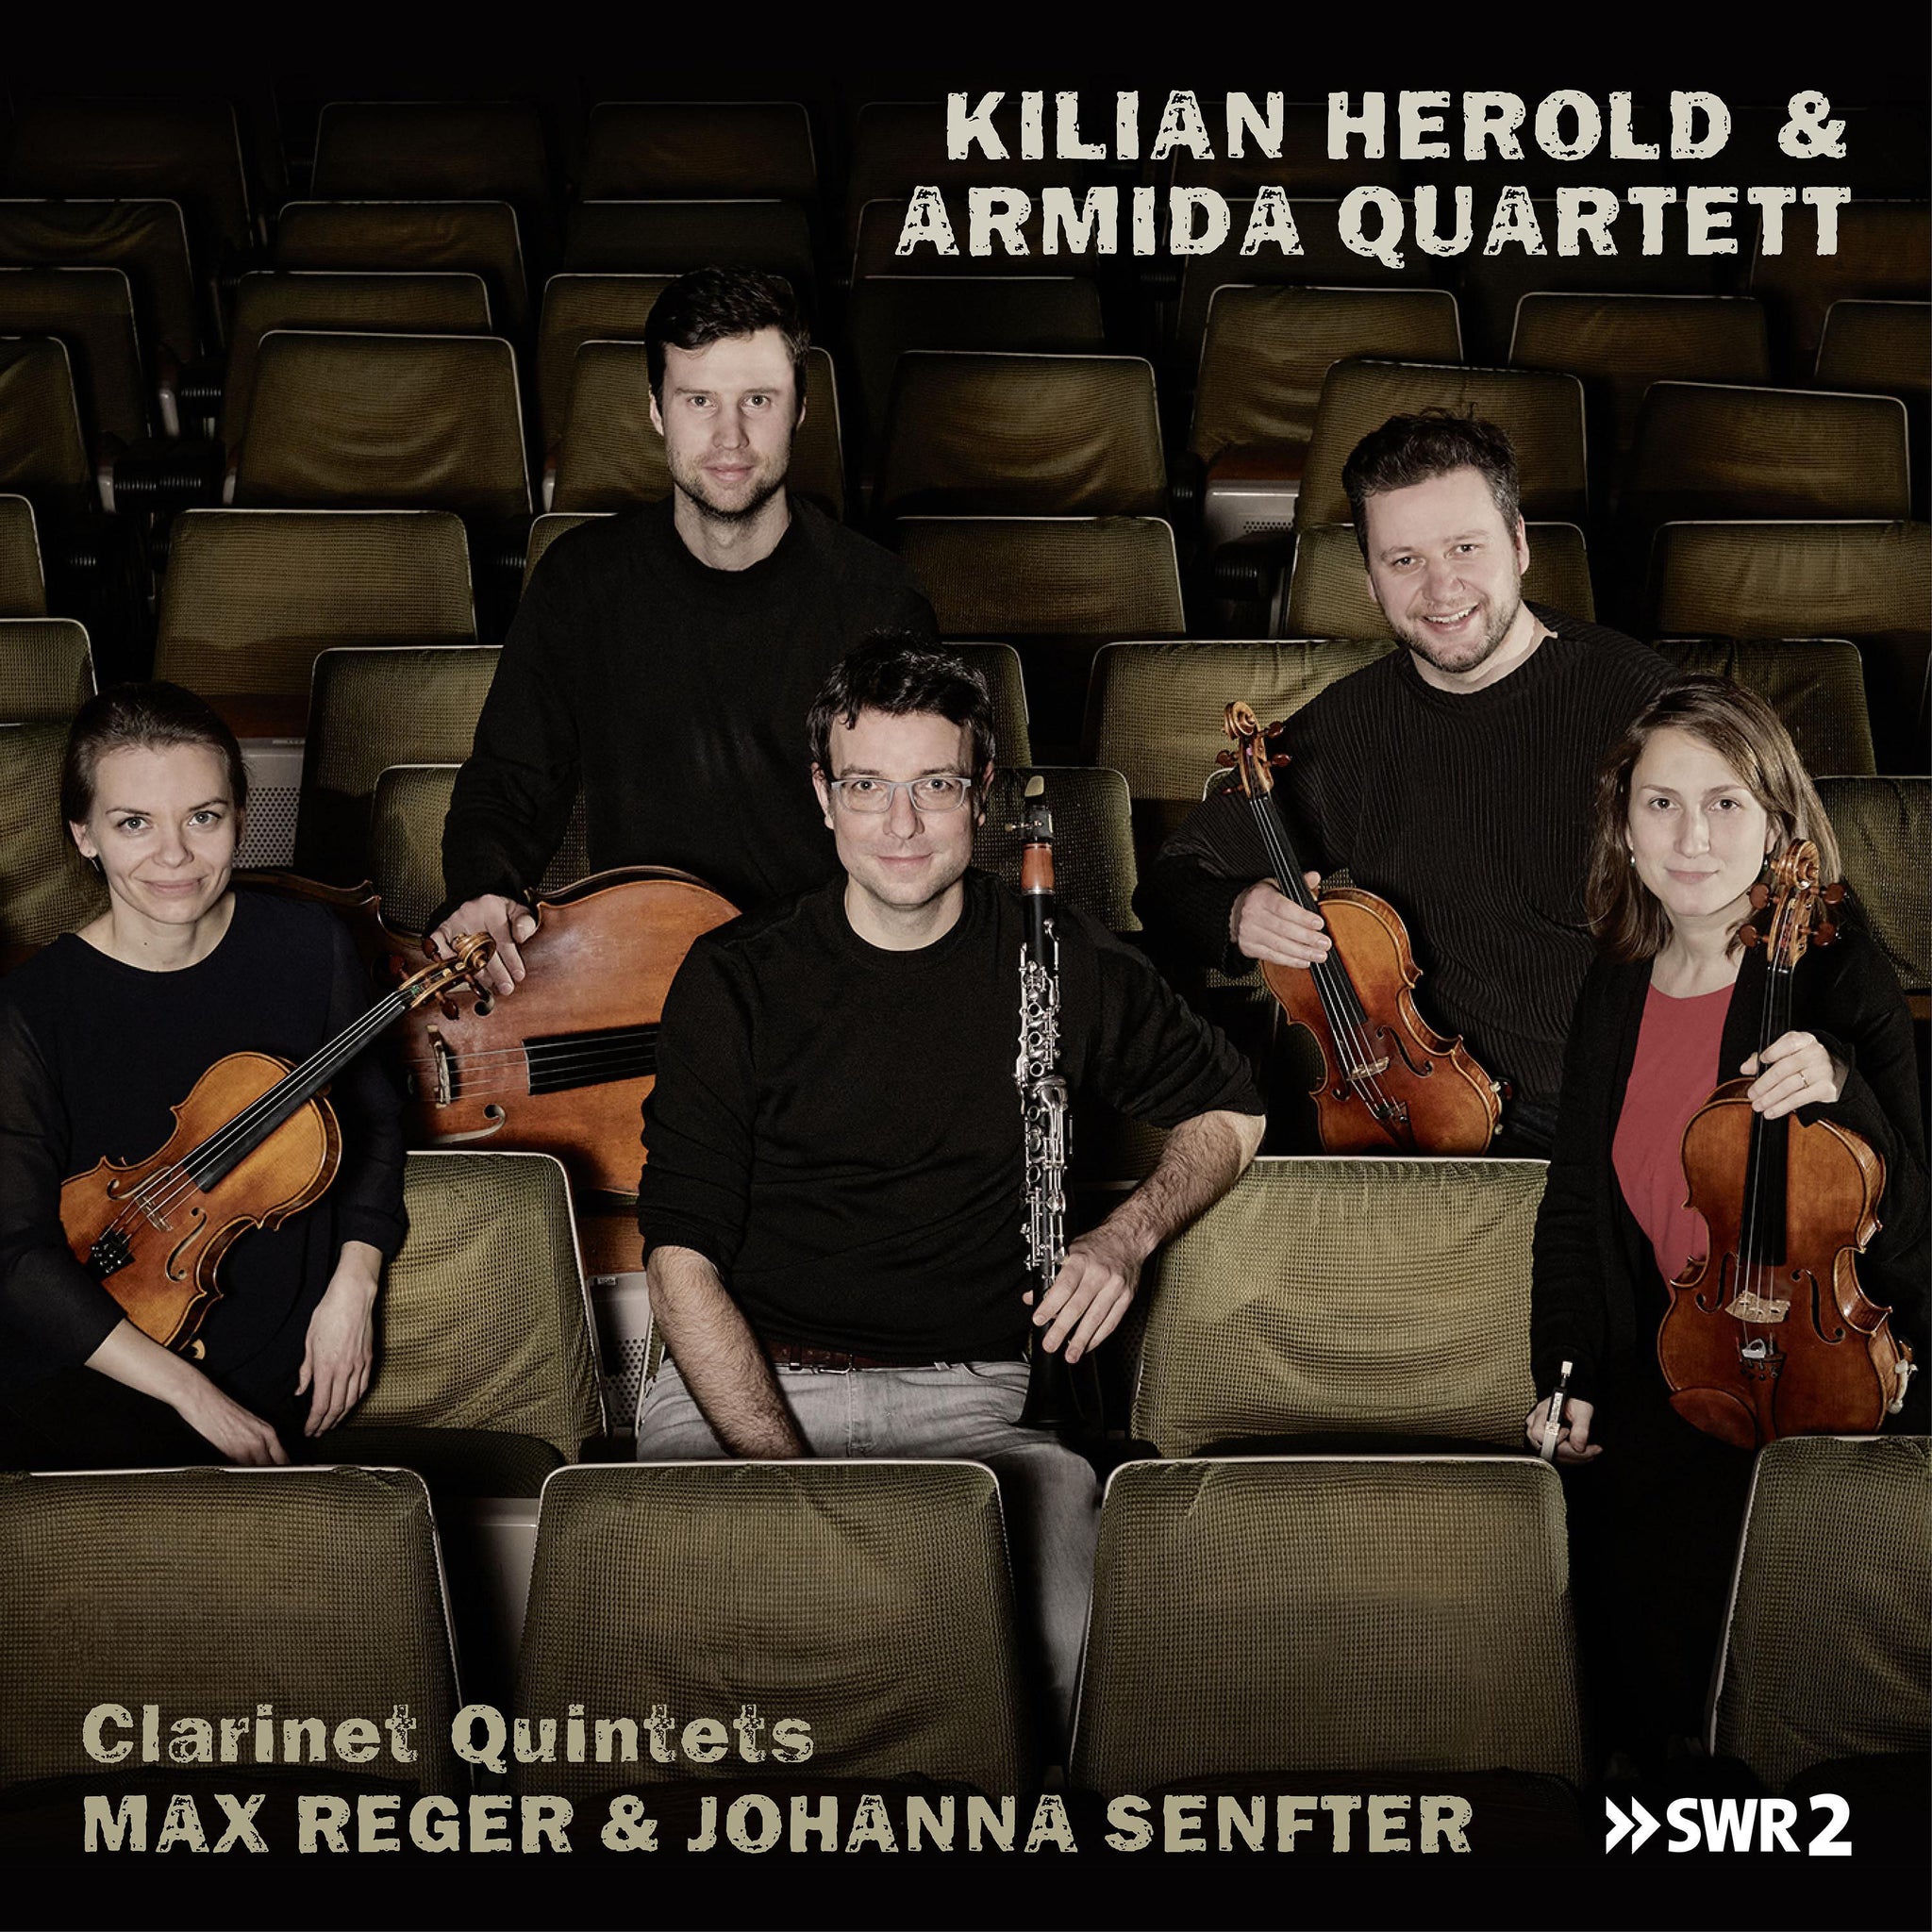 Reger & Senfter: Clarinet Quintets / Herold, Armida Quartet